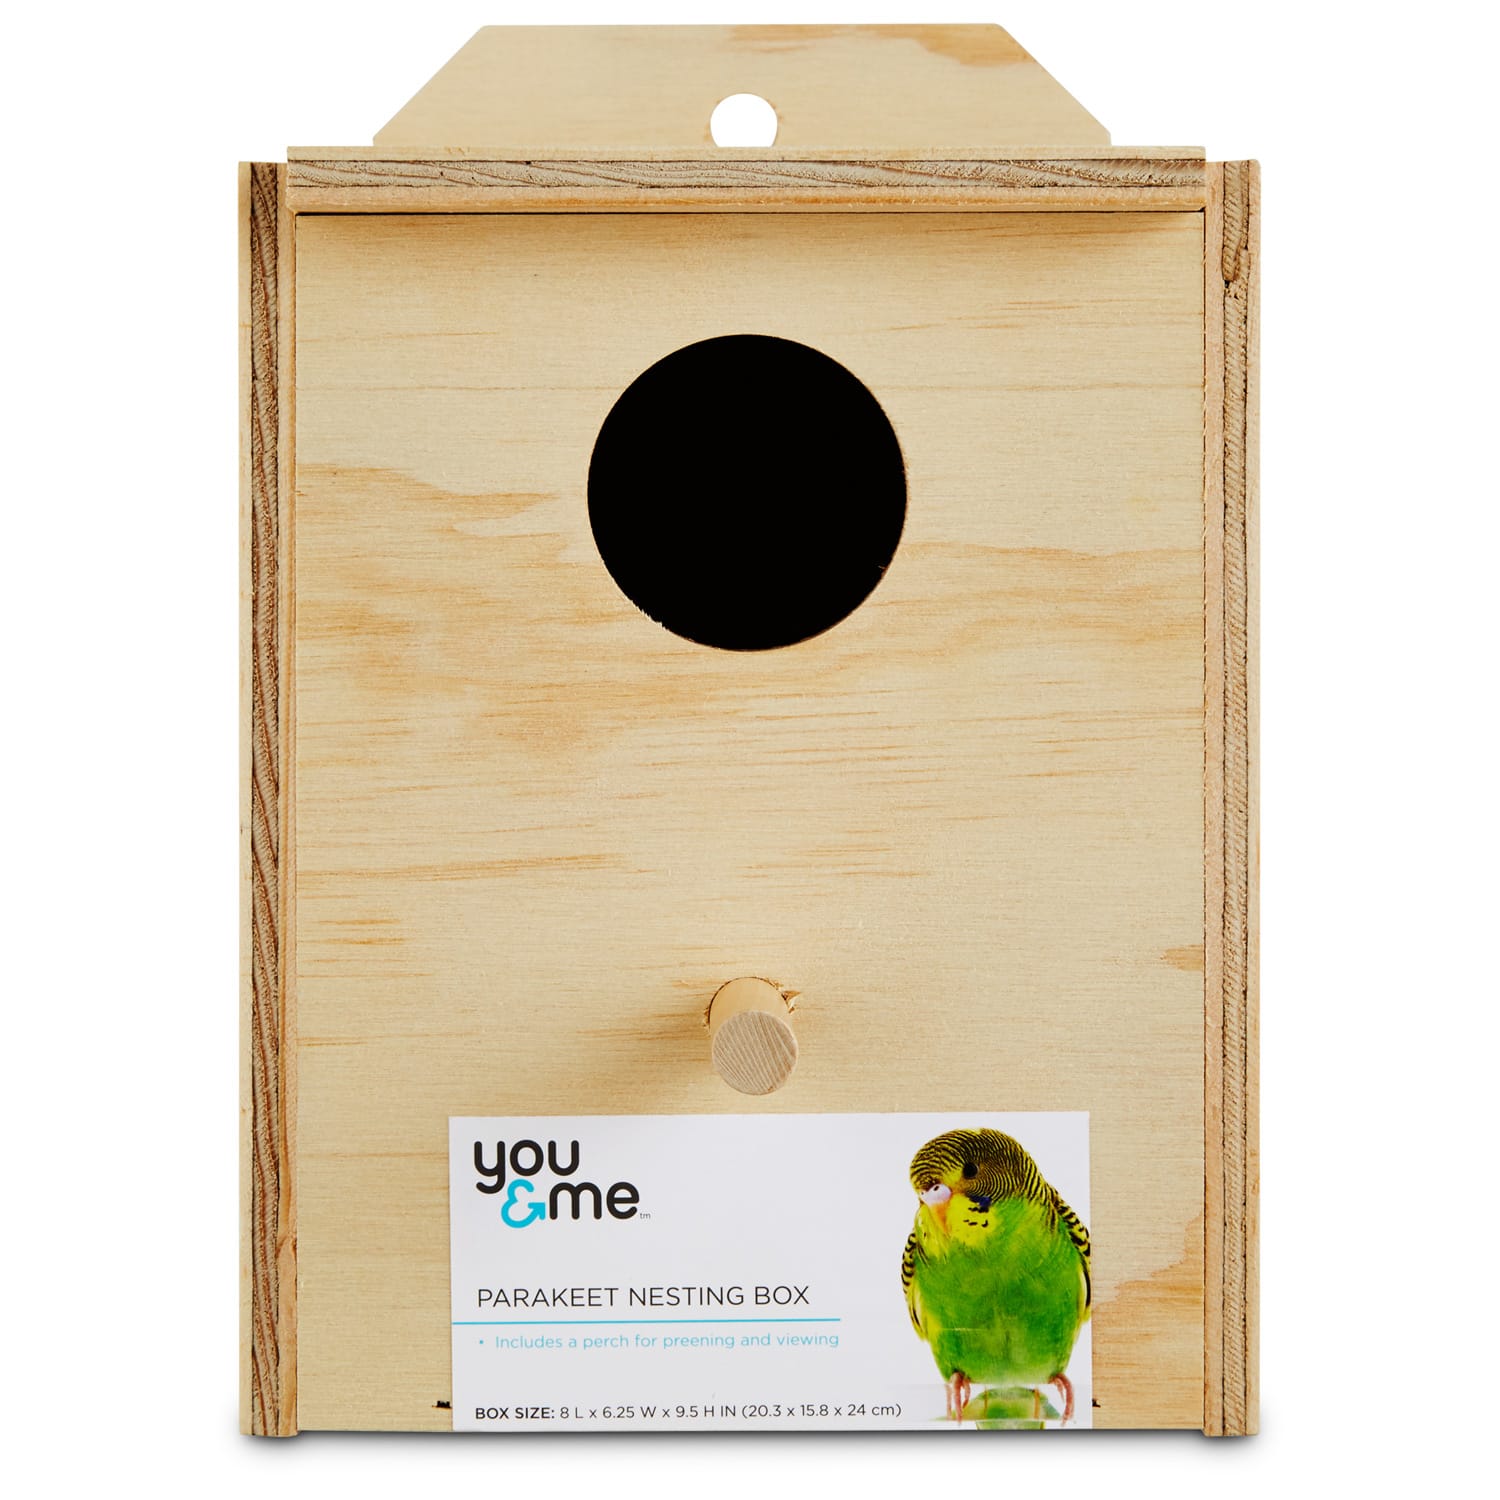 Wooden Bird Nesting Box Parakeet Box Nest for Budgie,Parakeet,Lovebirds,Parrot 